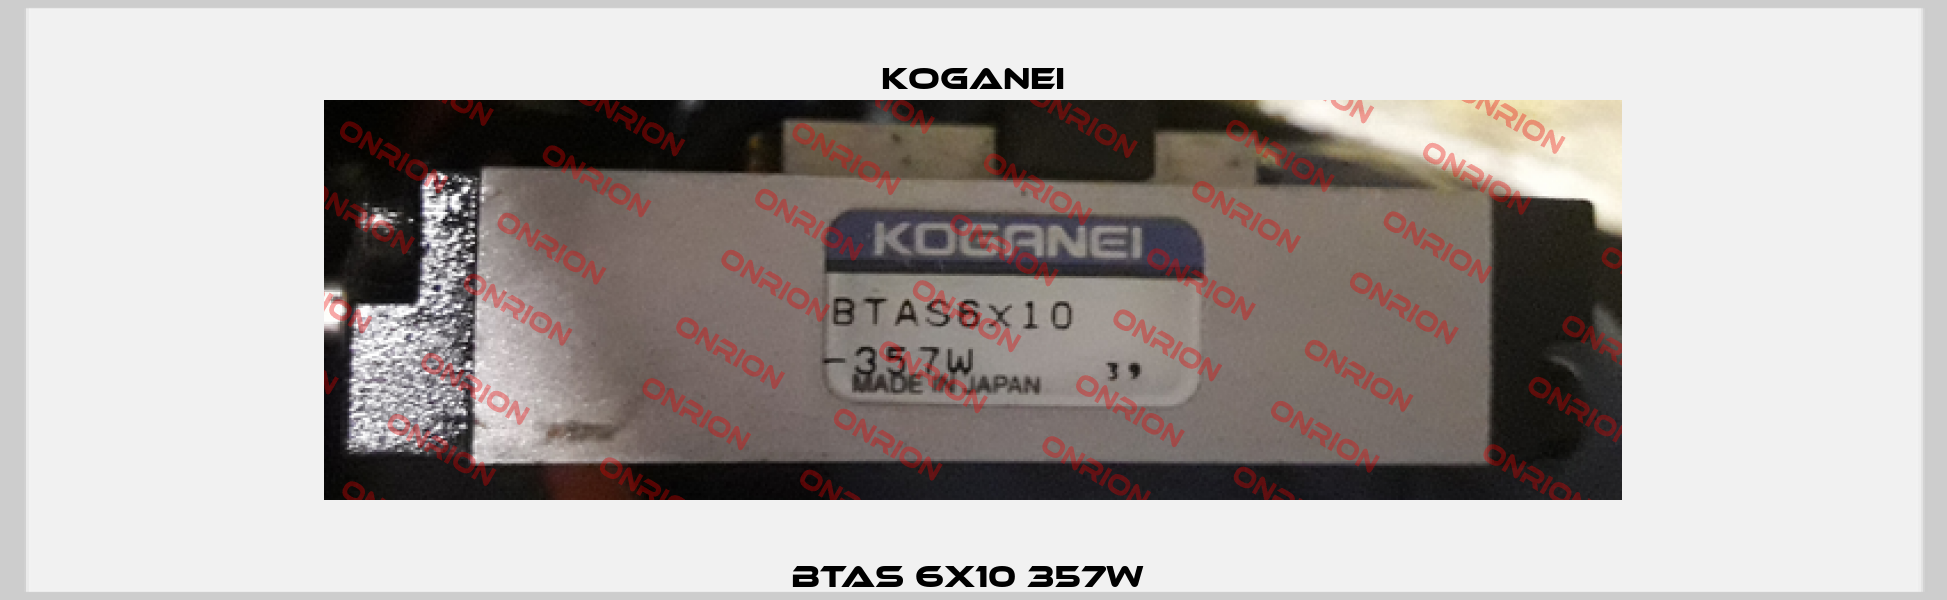 BTAS 6X10 357W  Koganei